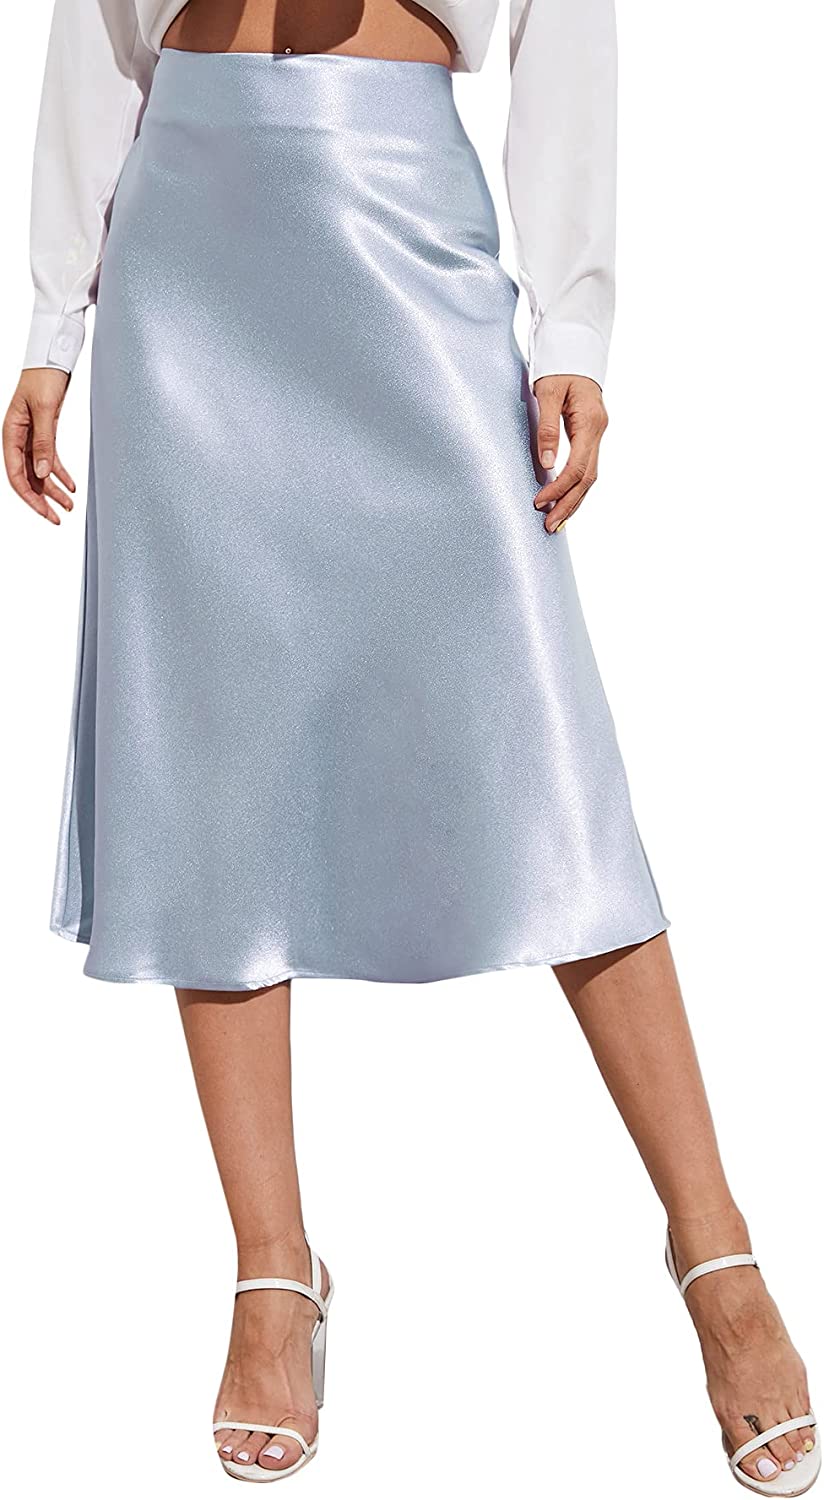 Wholesale Women's Elegant High Waist Satin A Line Flared Midi Skirt